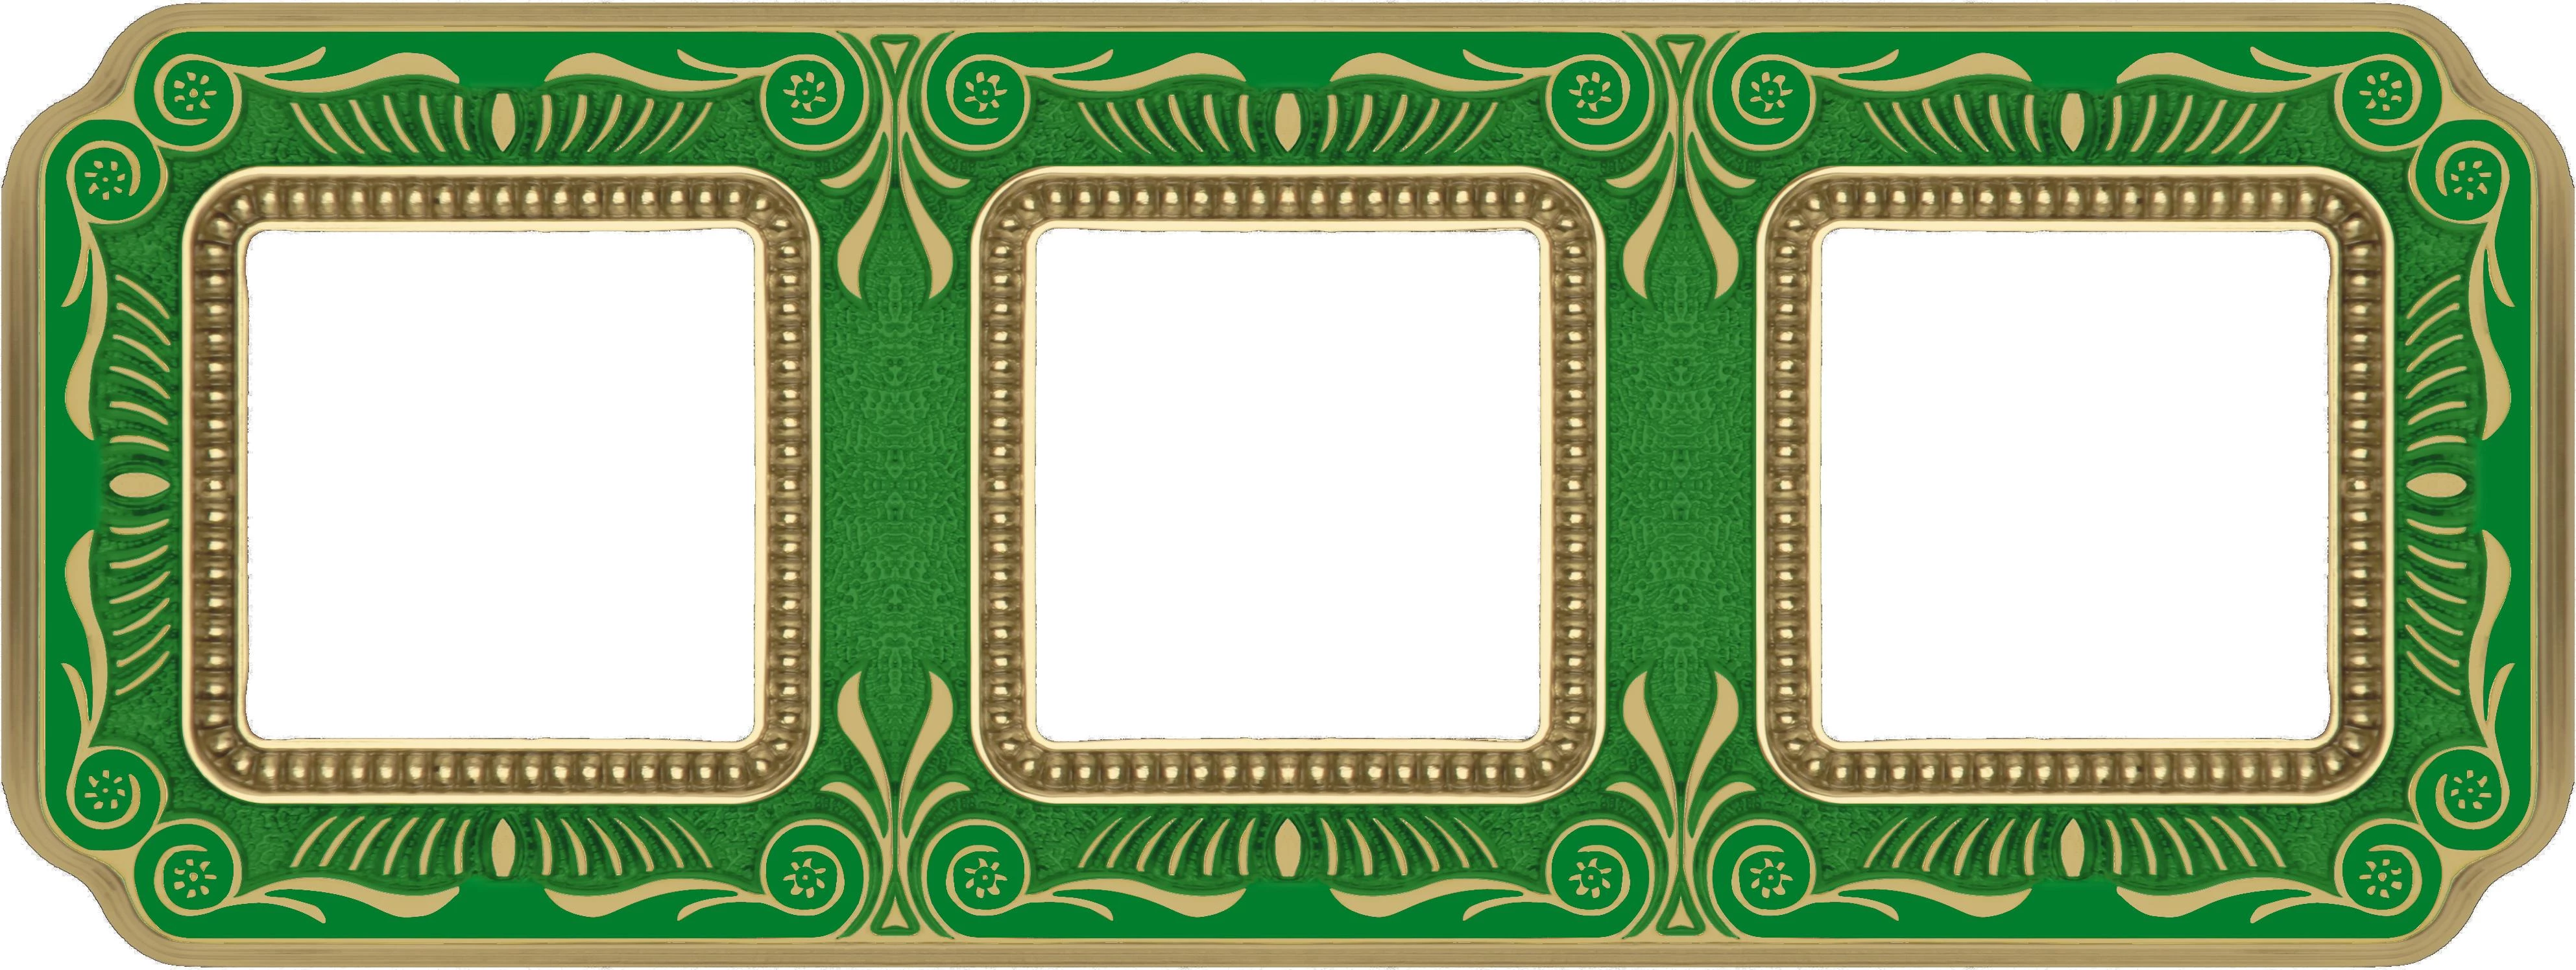  артикул FD01363VEEN название Рамка 3-ая (тройная), цвет Изумрудно-зеленый, Firenze, Fede